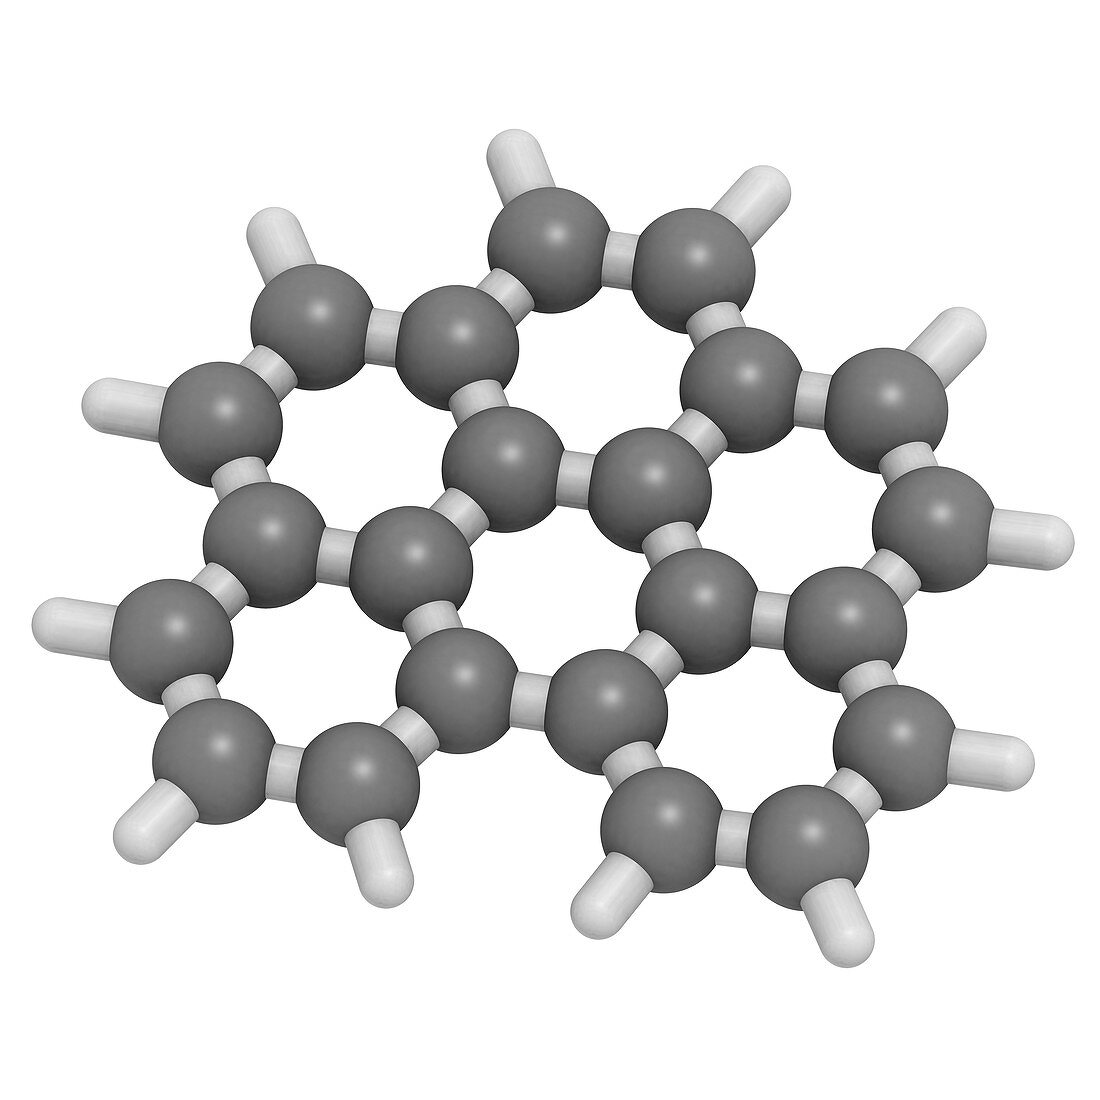 Benzoperylene molecular model